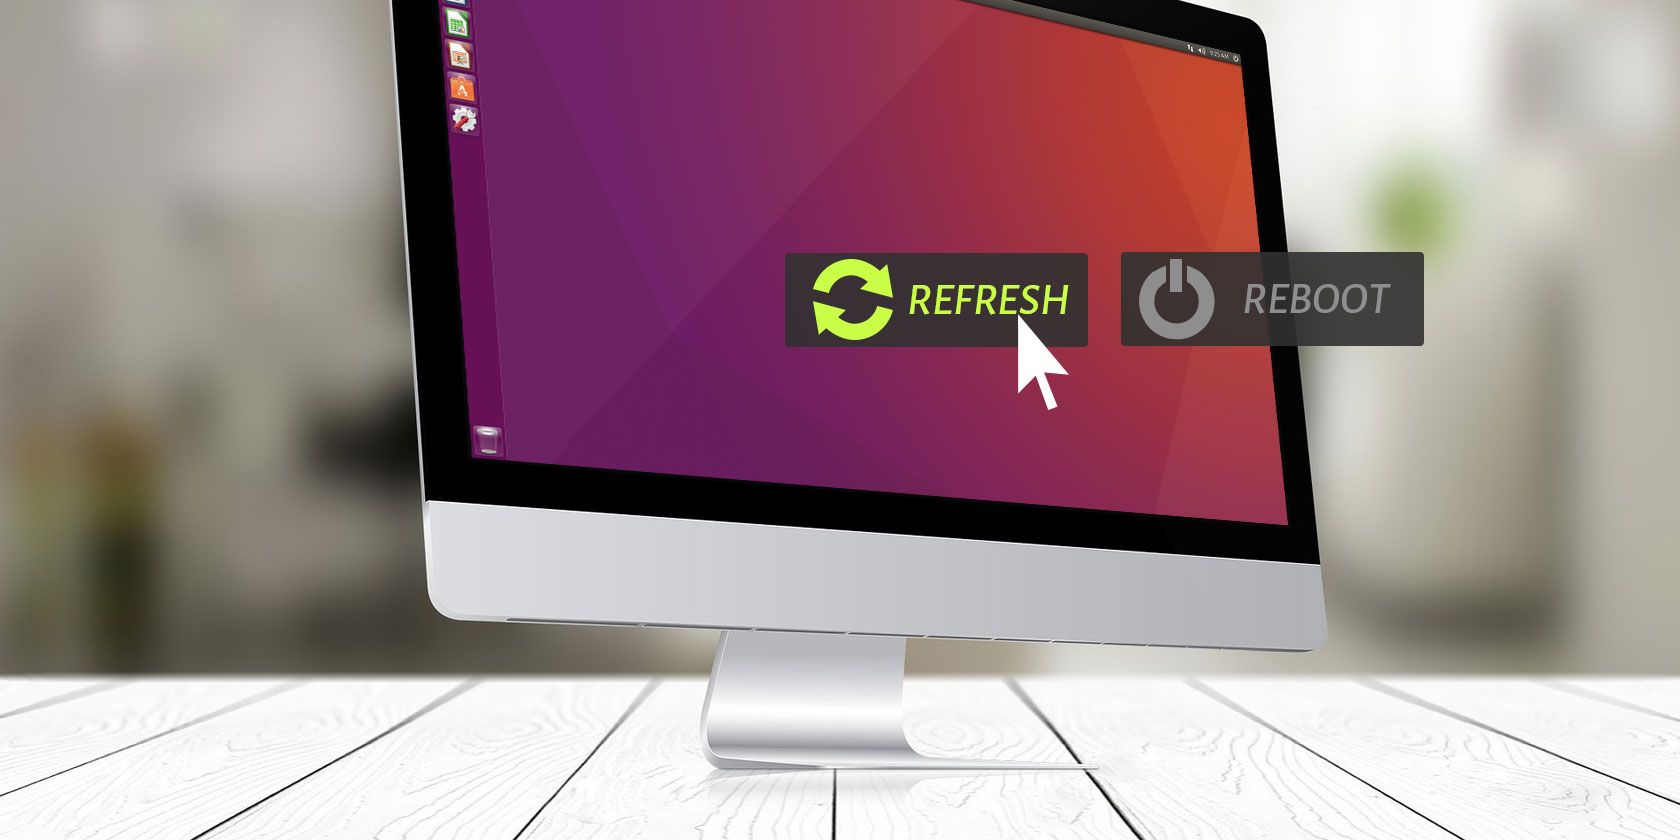 linux refresh not reboot